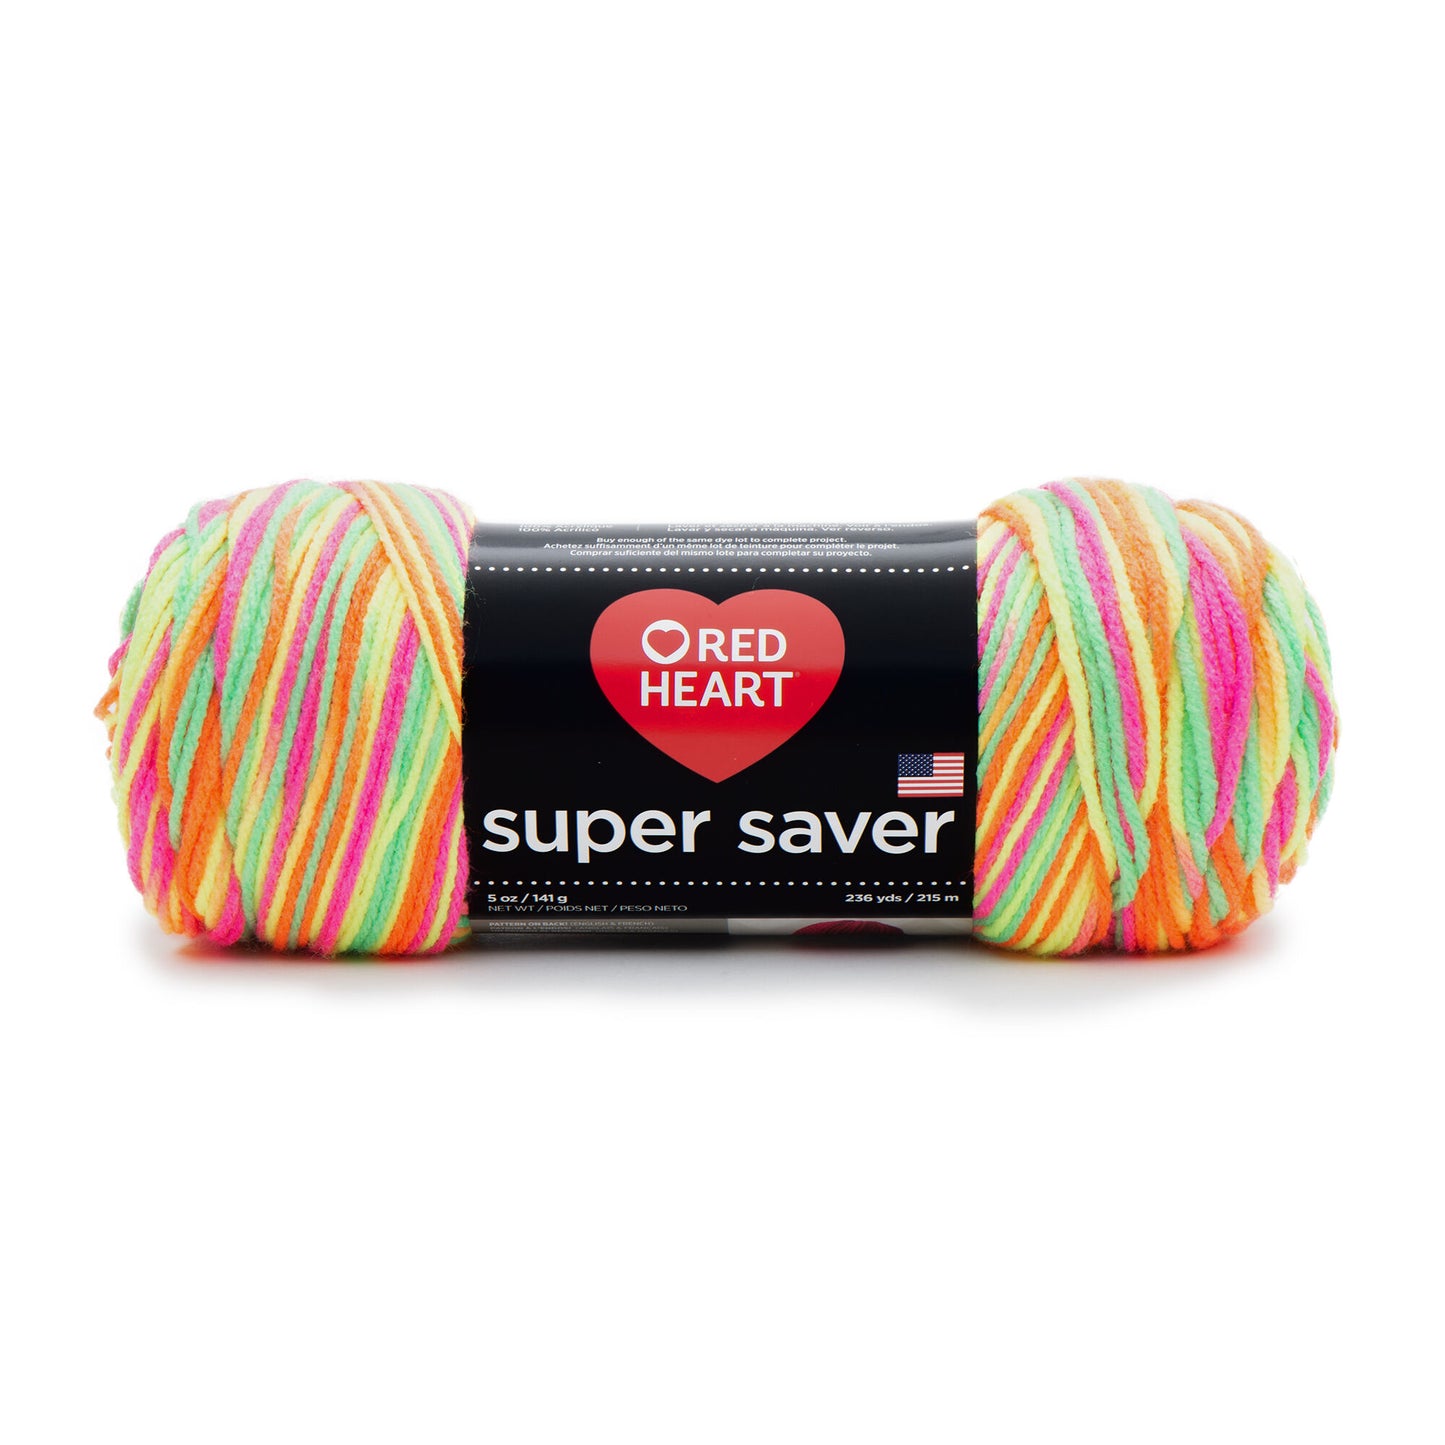 Red Heart Super Saver - Stripes/Variegated